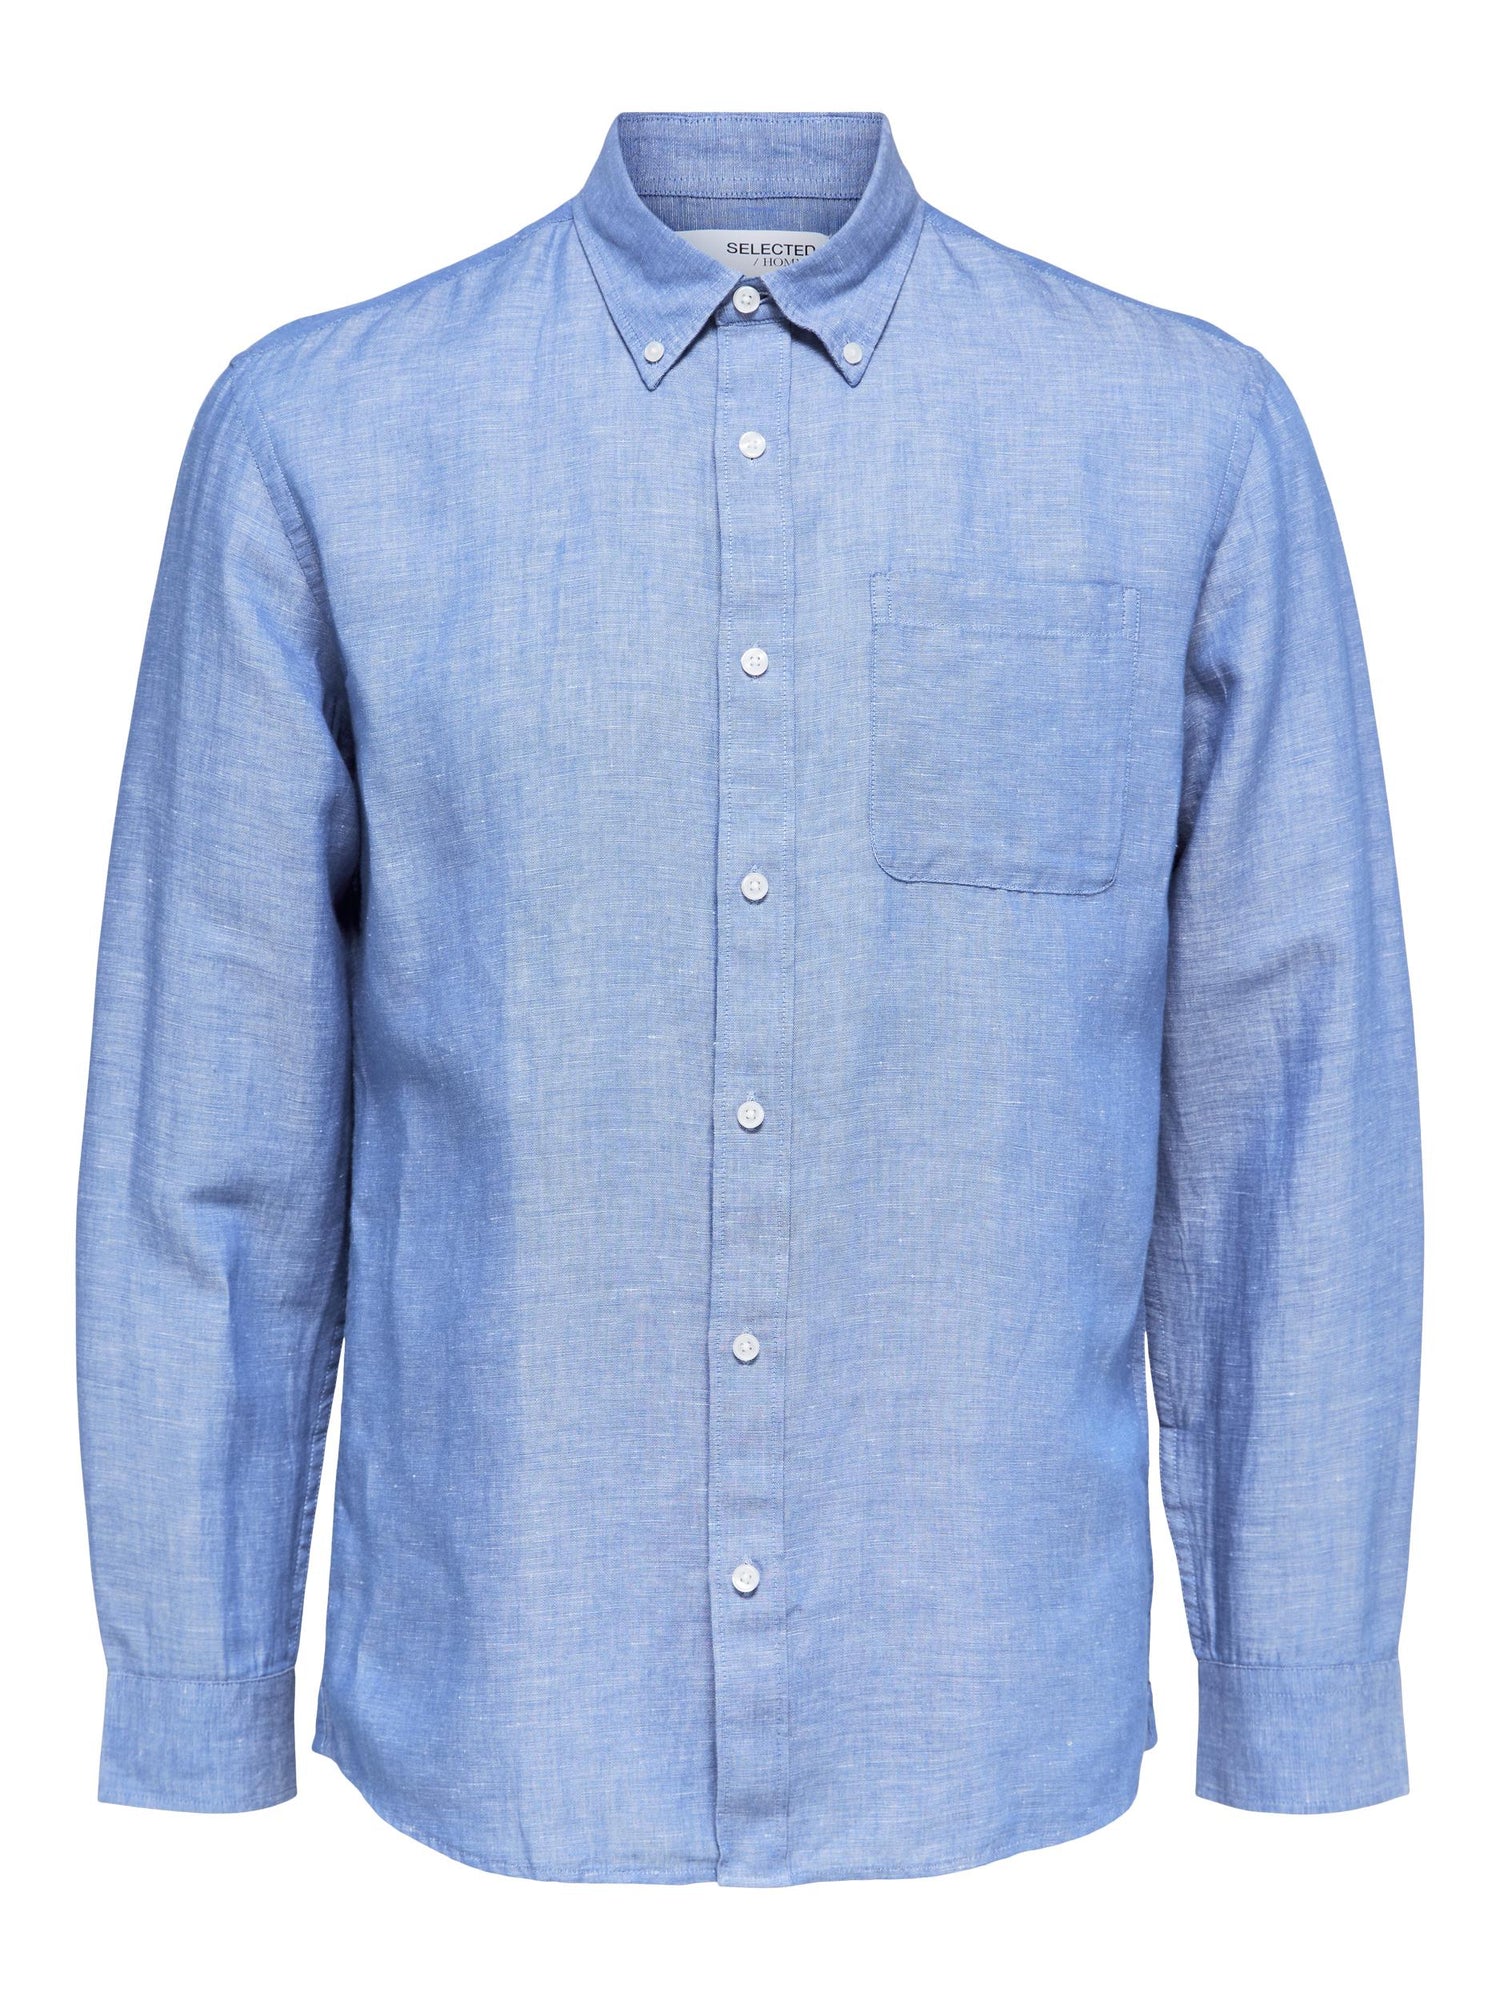 Long Sleeve Linen Shirt in light Medium Blue Denim